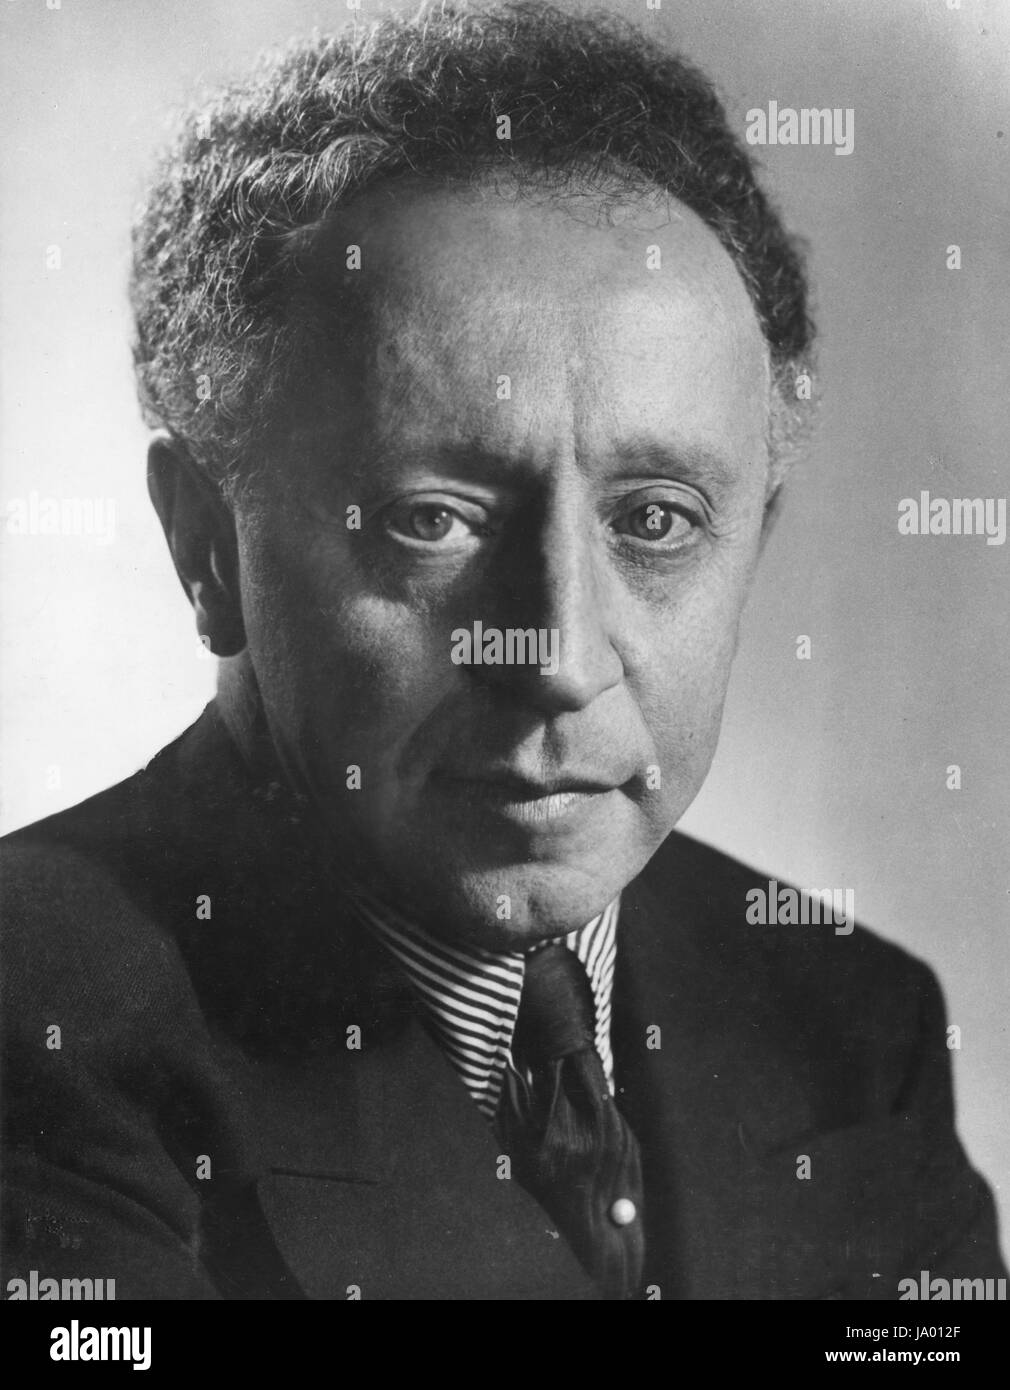 Porträt von Arthur Rubenstein, Polnisch-amerikanische Pianistin, New York, NY, 1950. Stockfoto